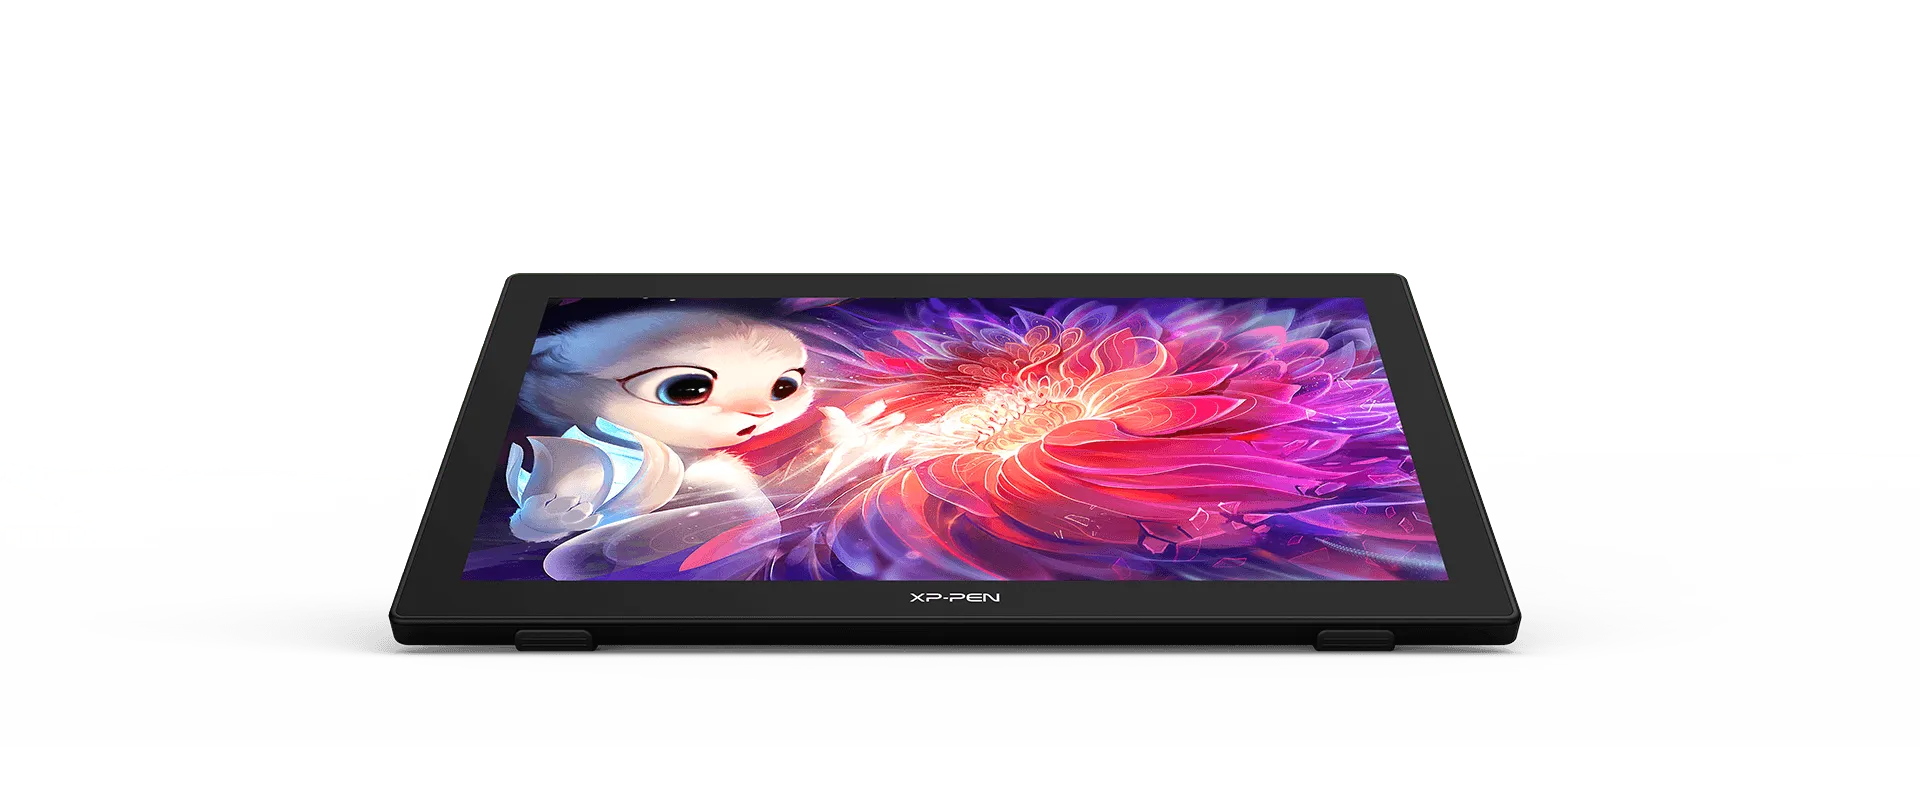 Artist22セカンド 高性能・大画面・高コスパの液晶タブレット | XPPen